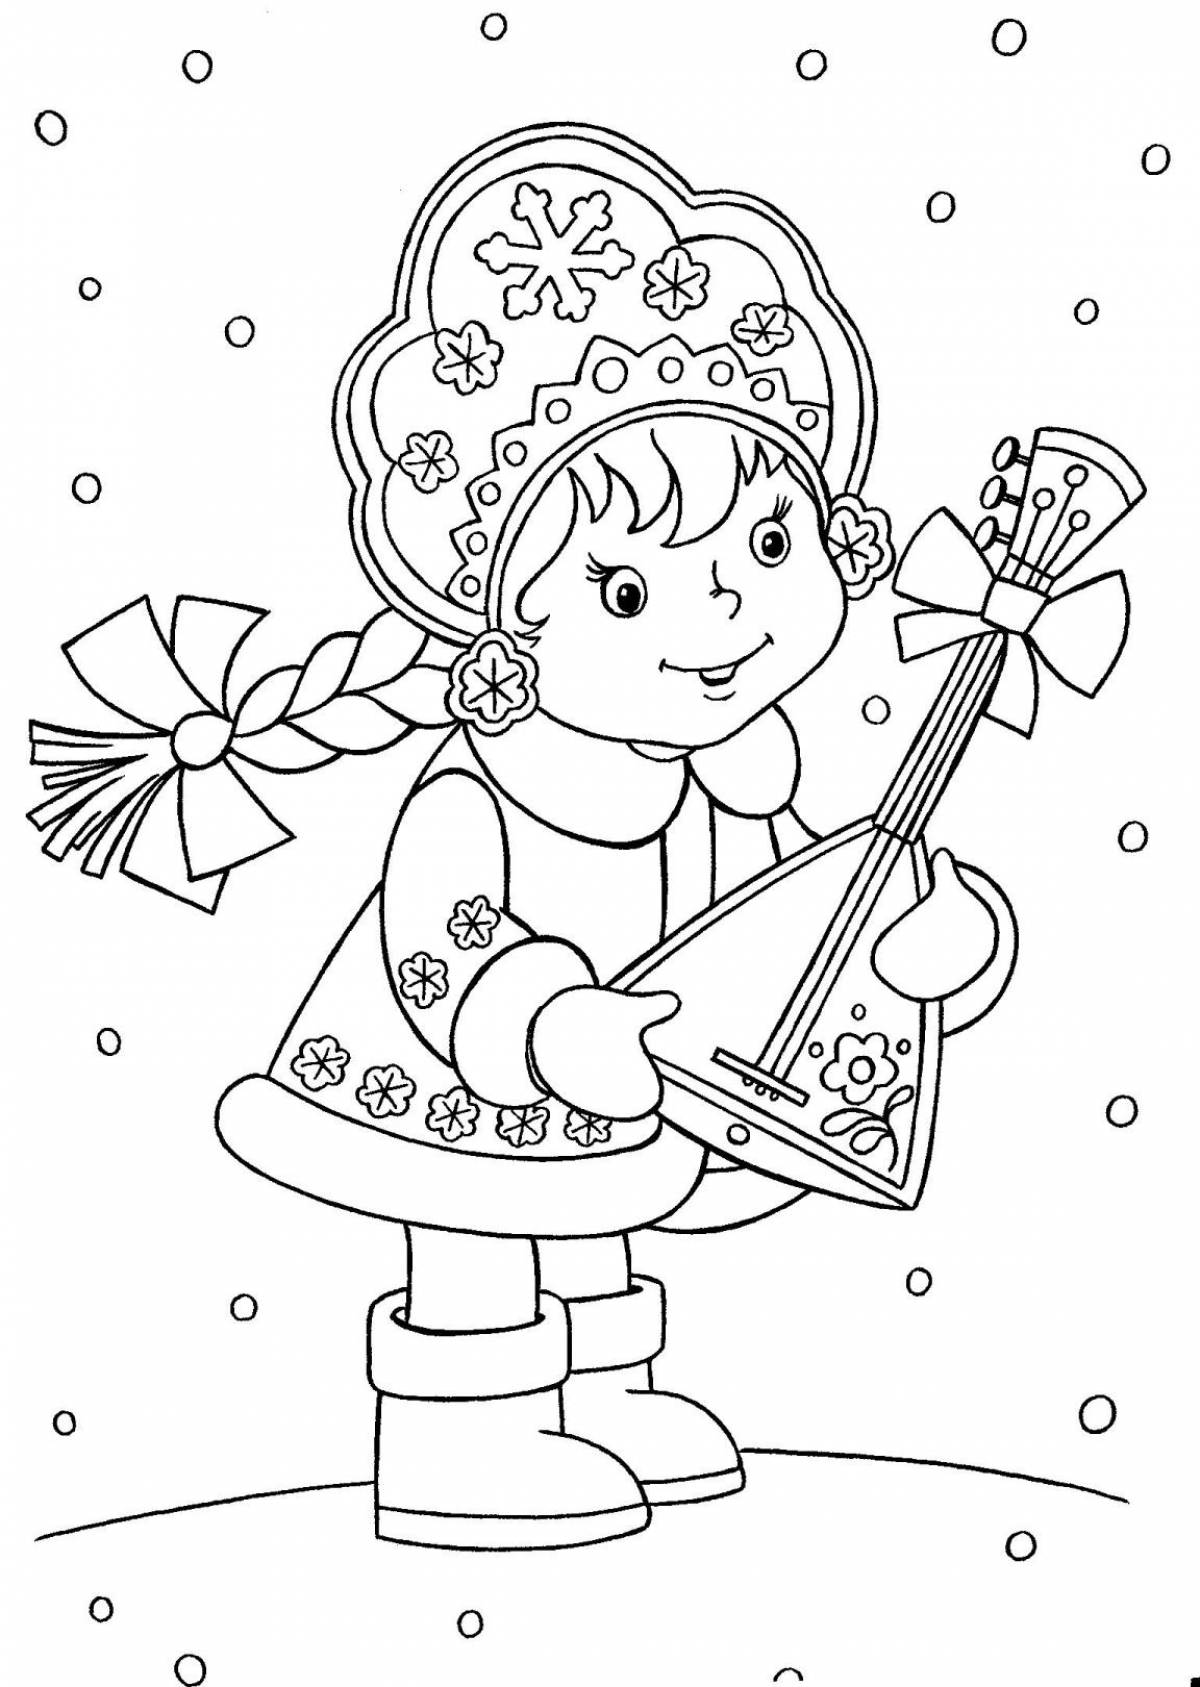 Coloring page New Year's snow maiden and balalaika